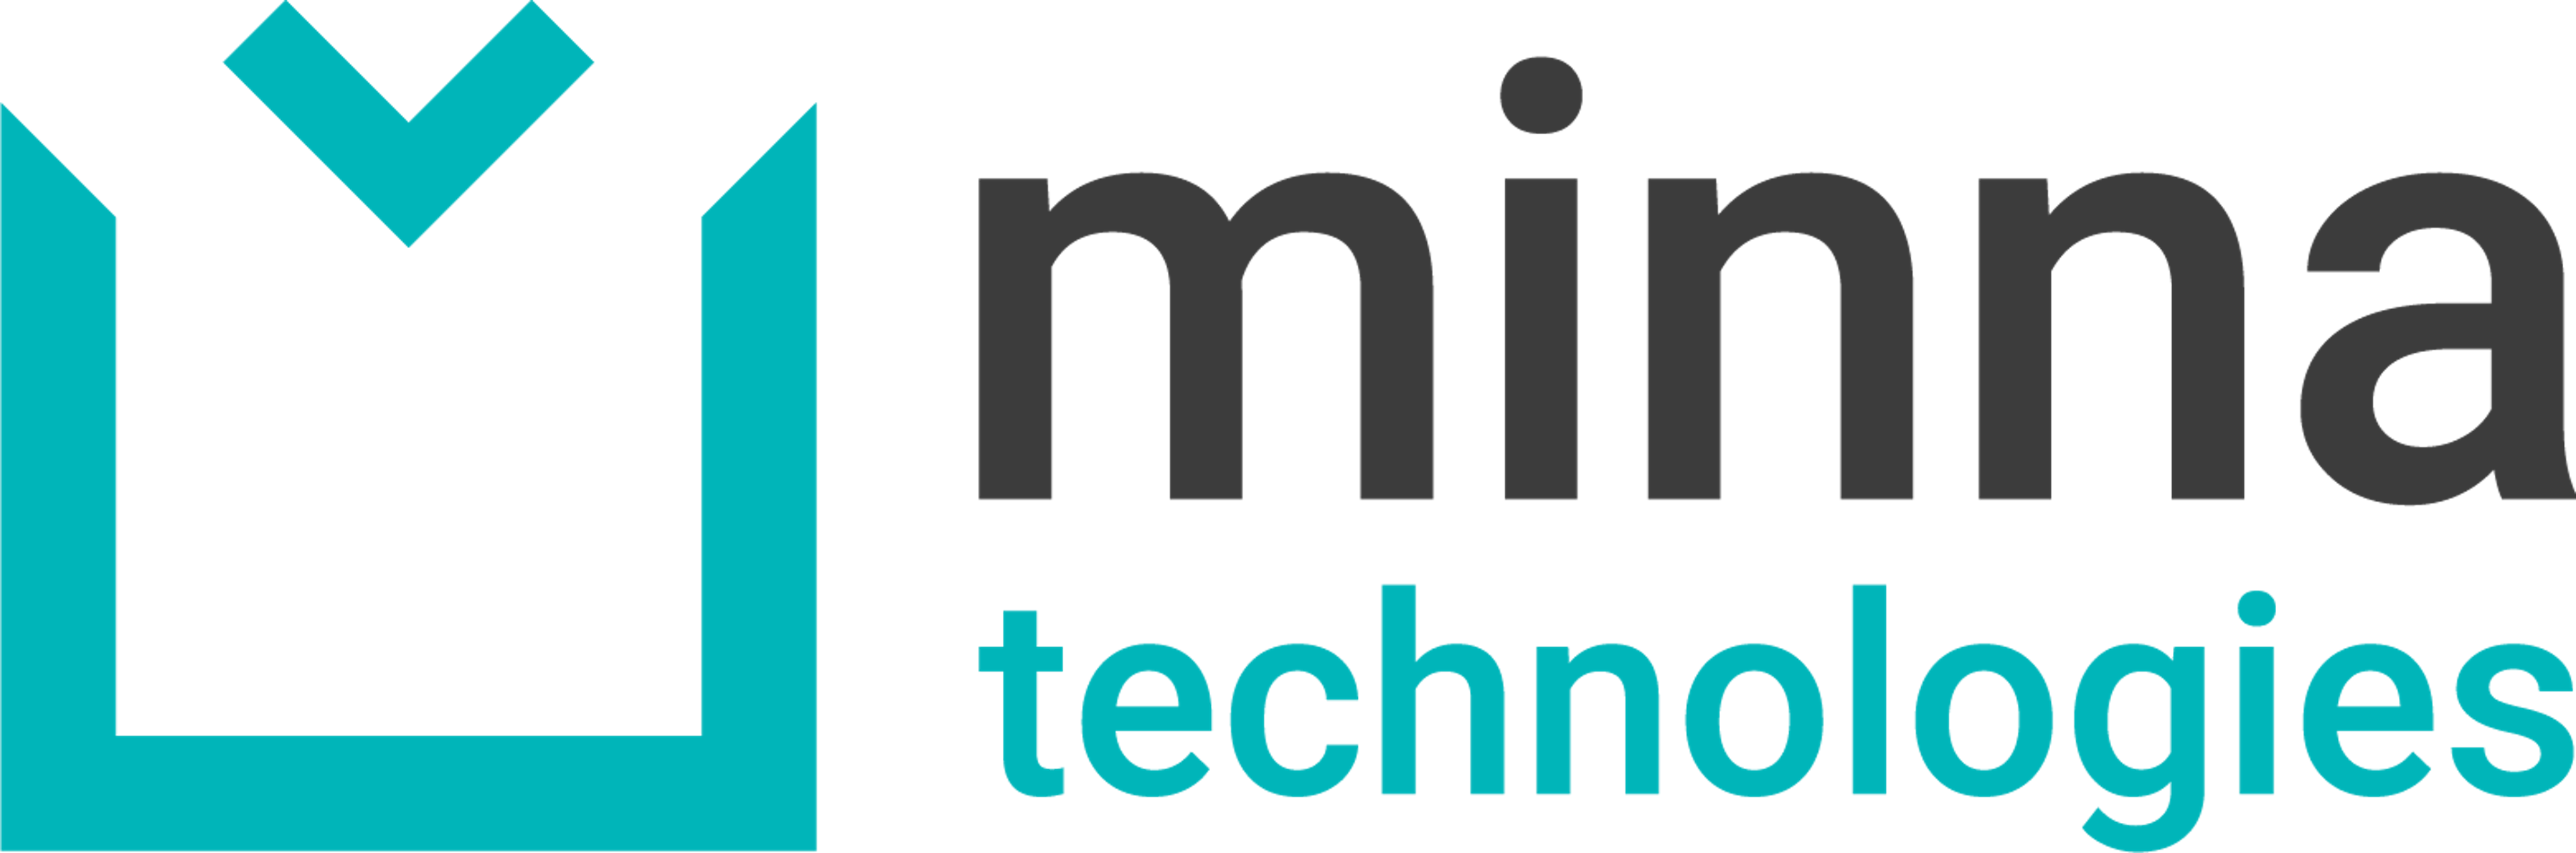 Minna Technologies